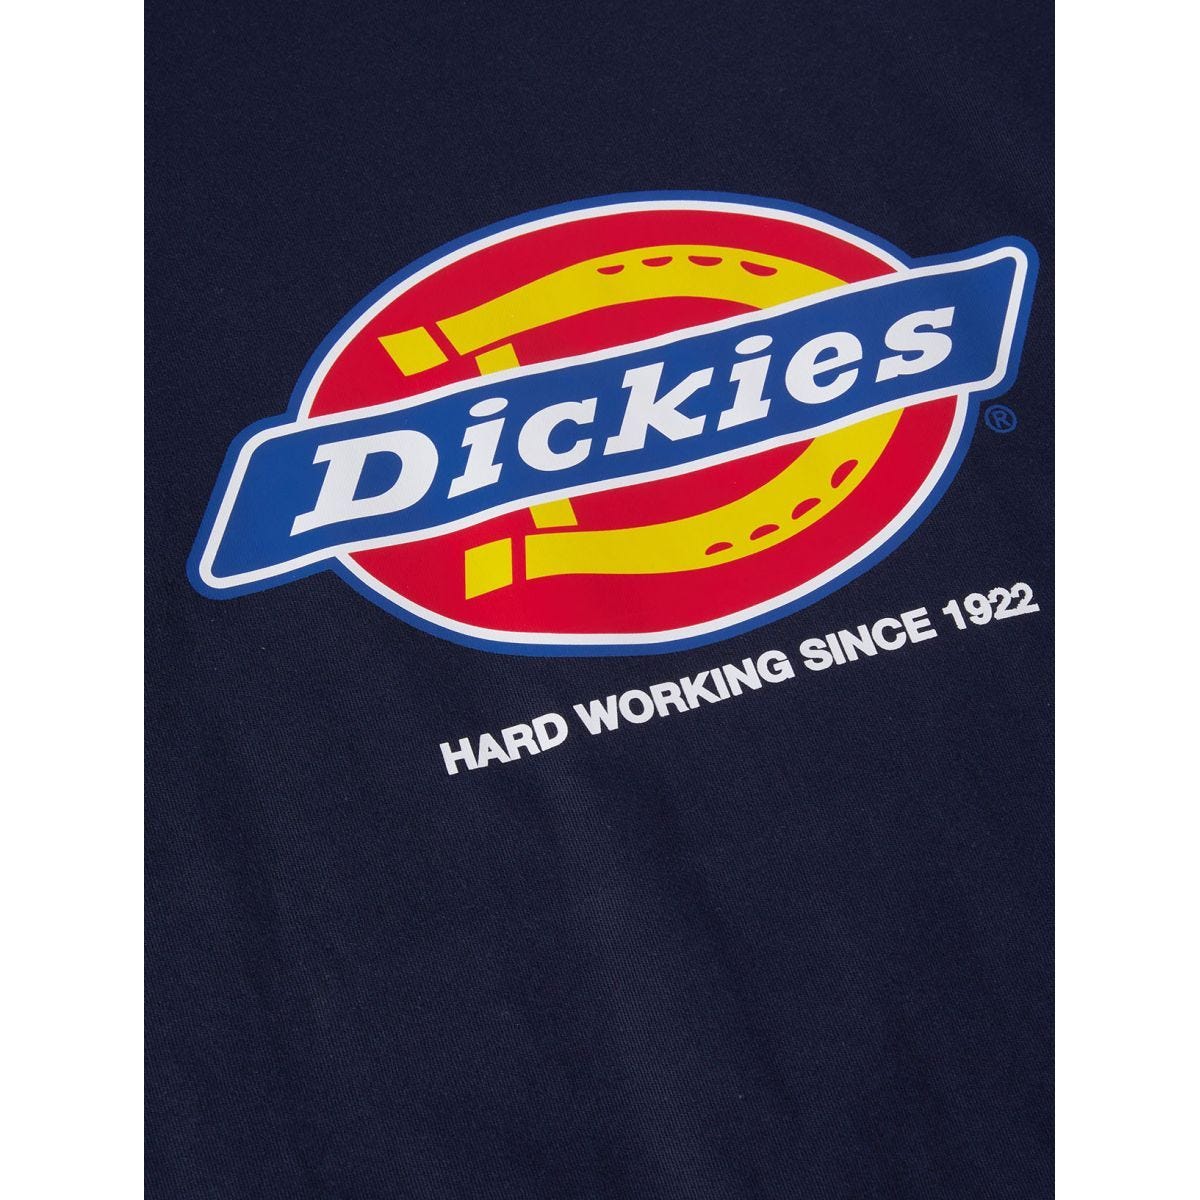 T-shirt de travail Denison bleu marine - Dickies - Taille L 4